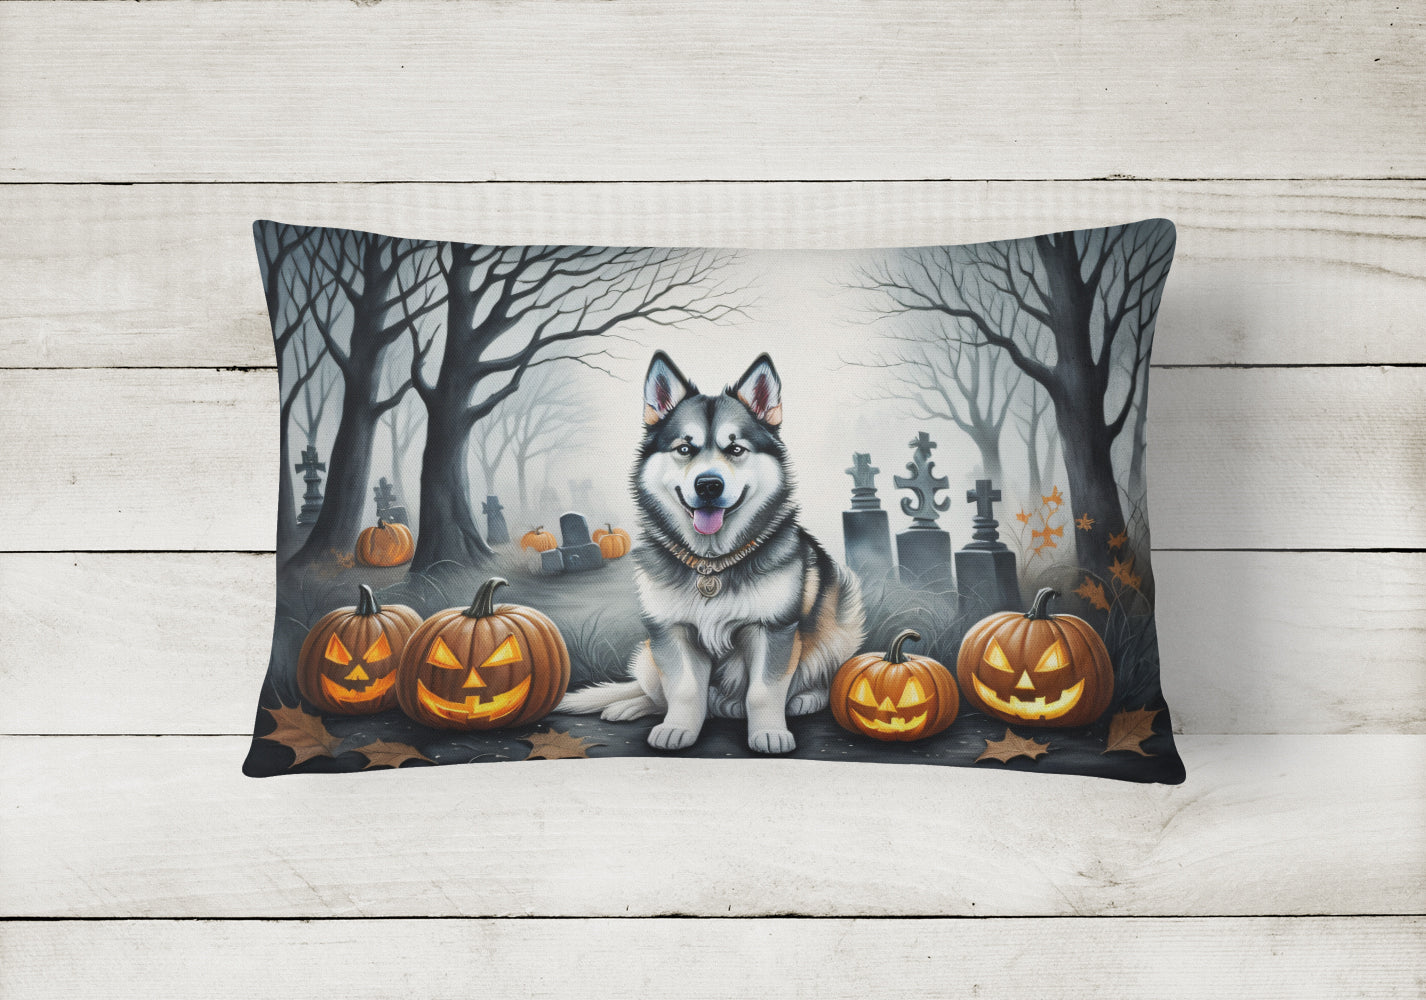 Buy this Alaskan Malamute Spooky Halloween Fabric Decorative Pillow